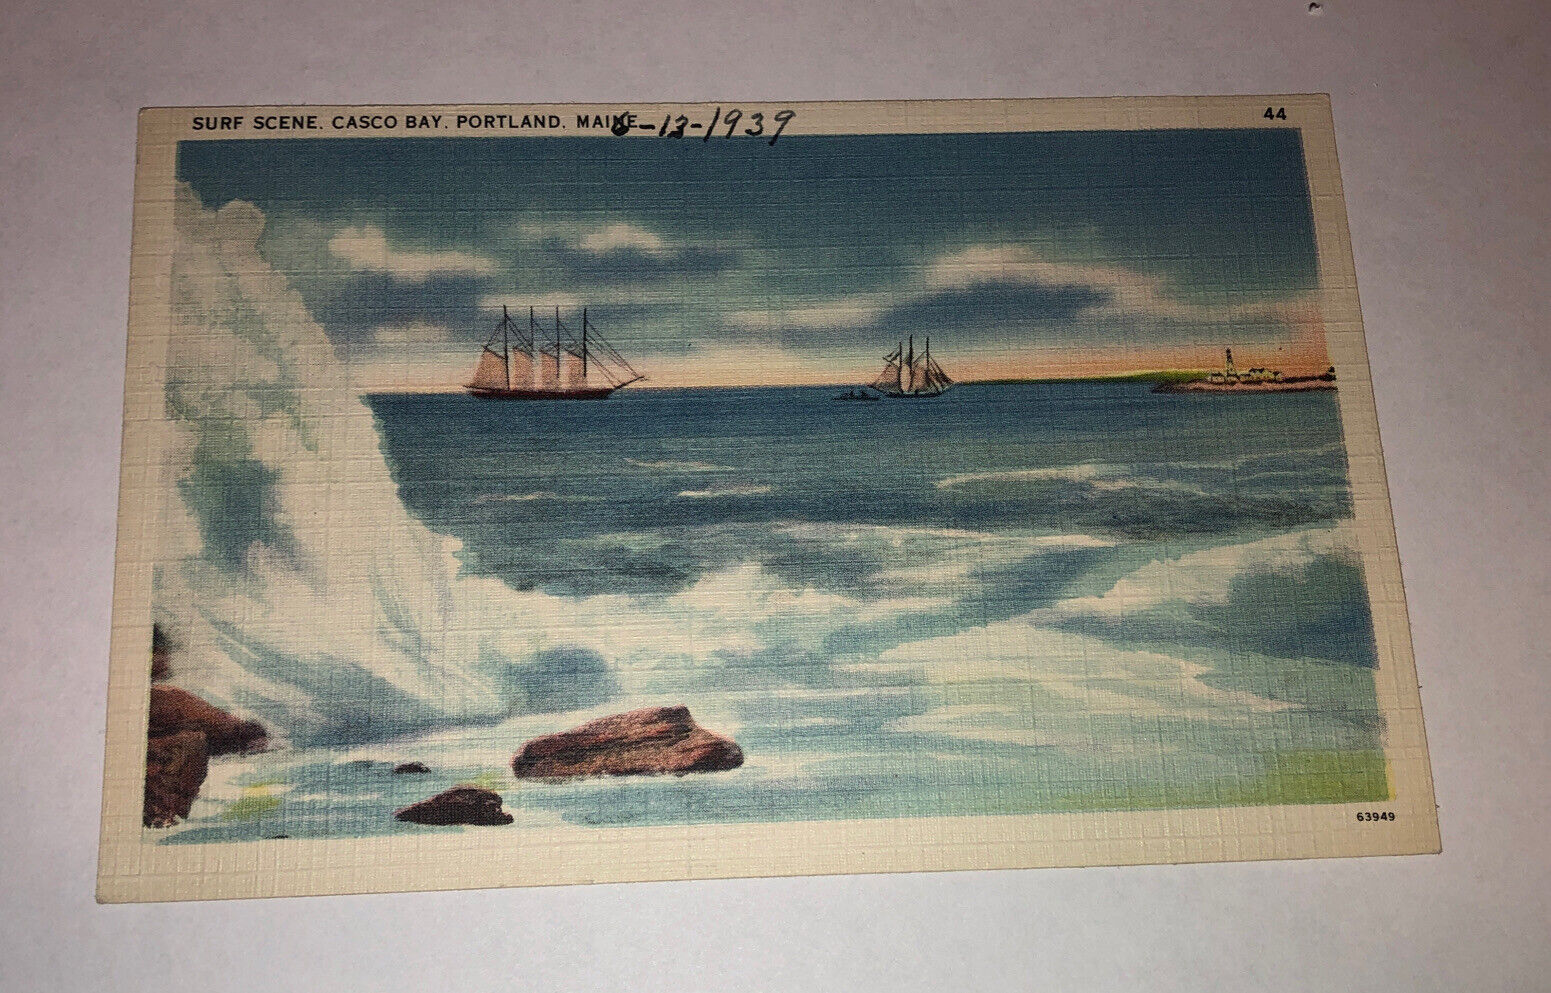 Vintage Postcard Portland Maine Surf Scene at Casco Bay Tall Ships 1939 Linen